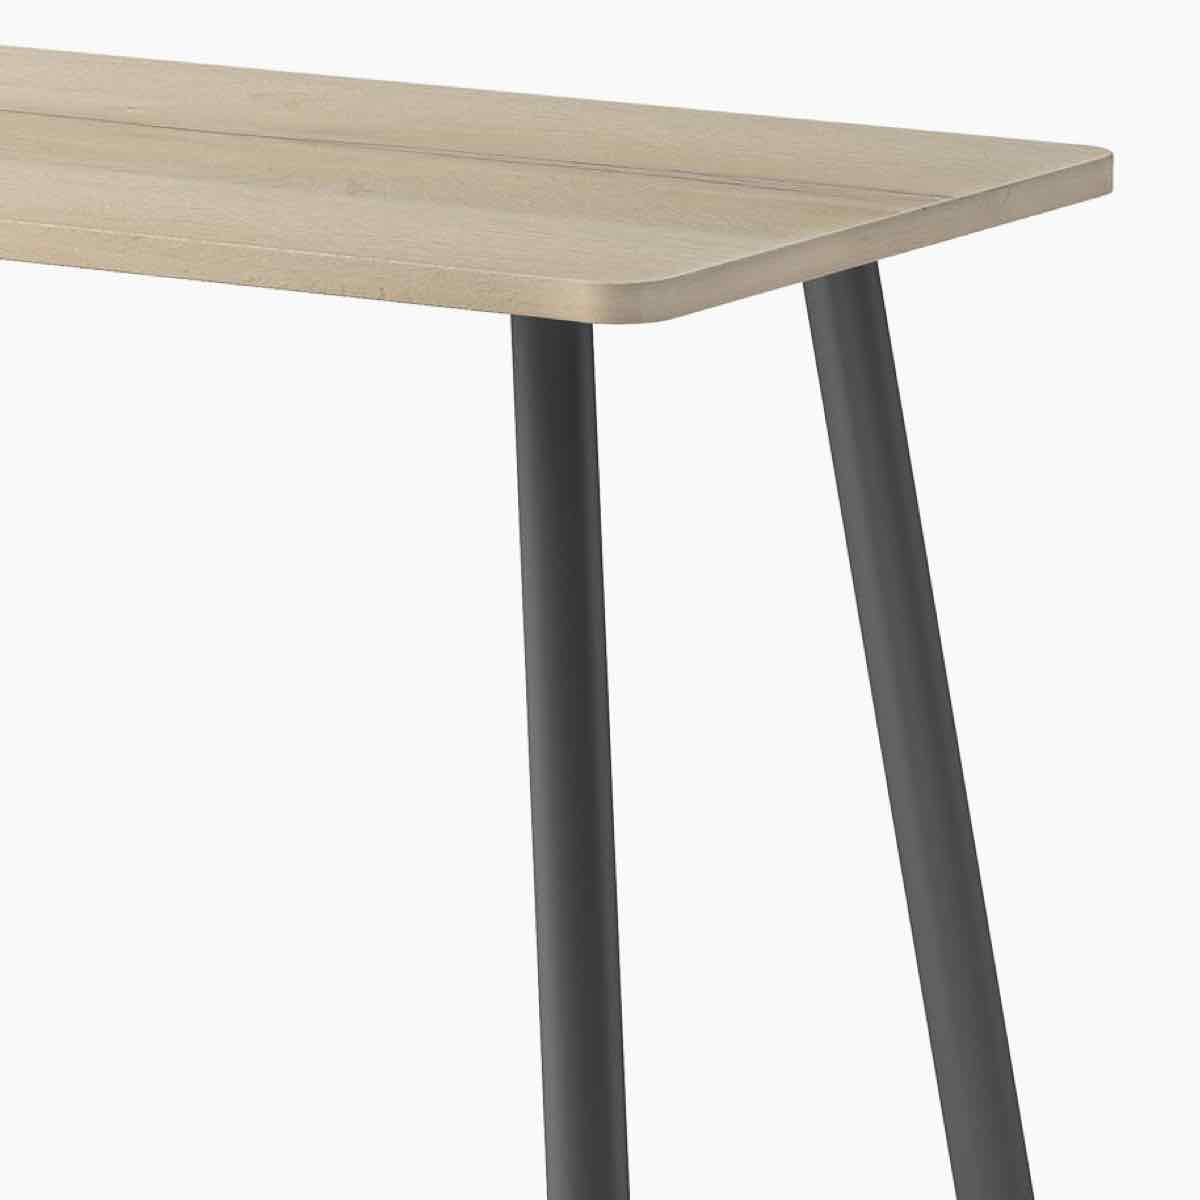 A single Memo Desk with dark grey legs and a light oak coloured top. 